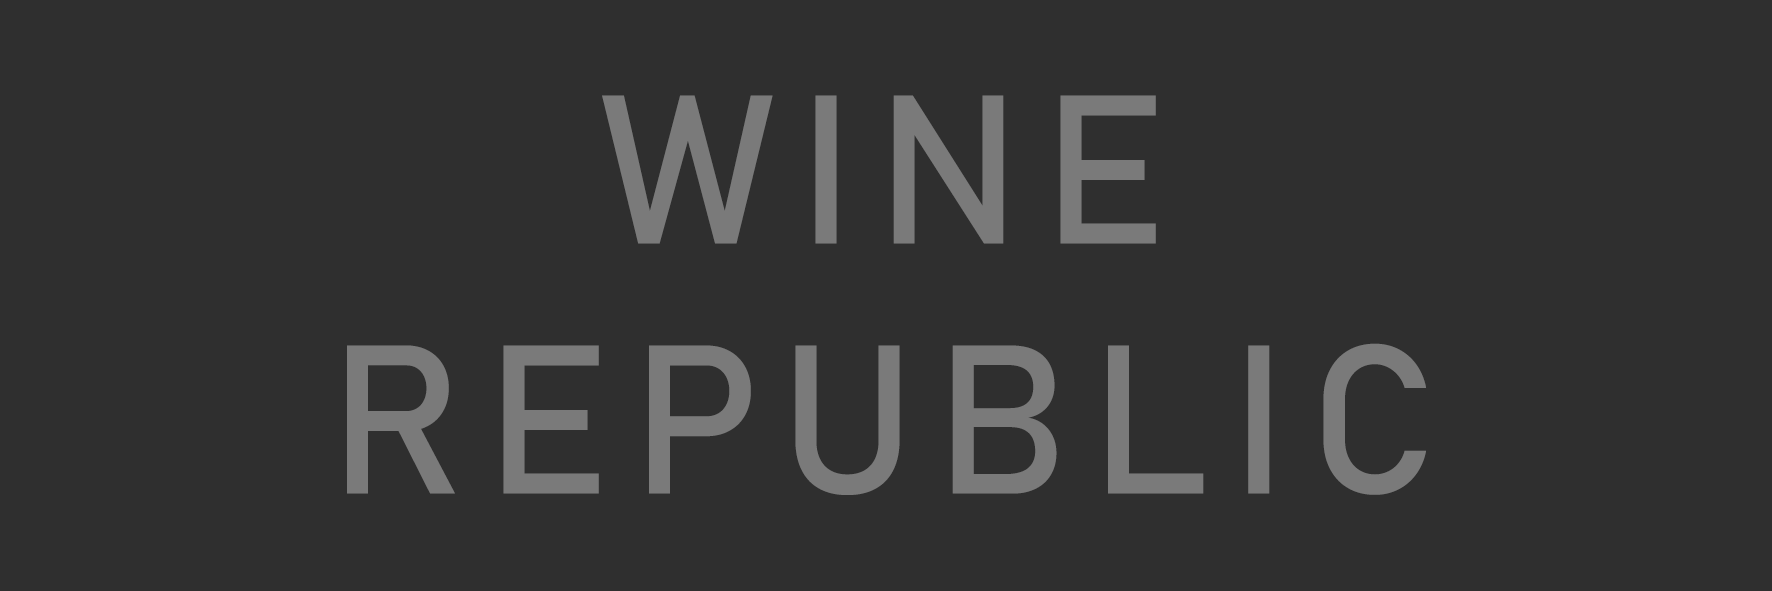 WINE REPUBLIC